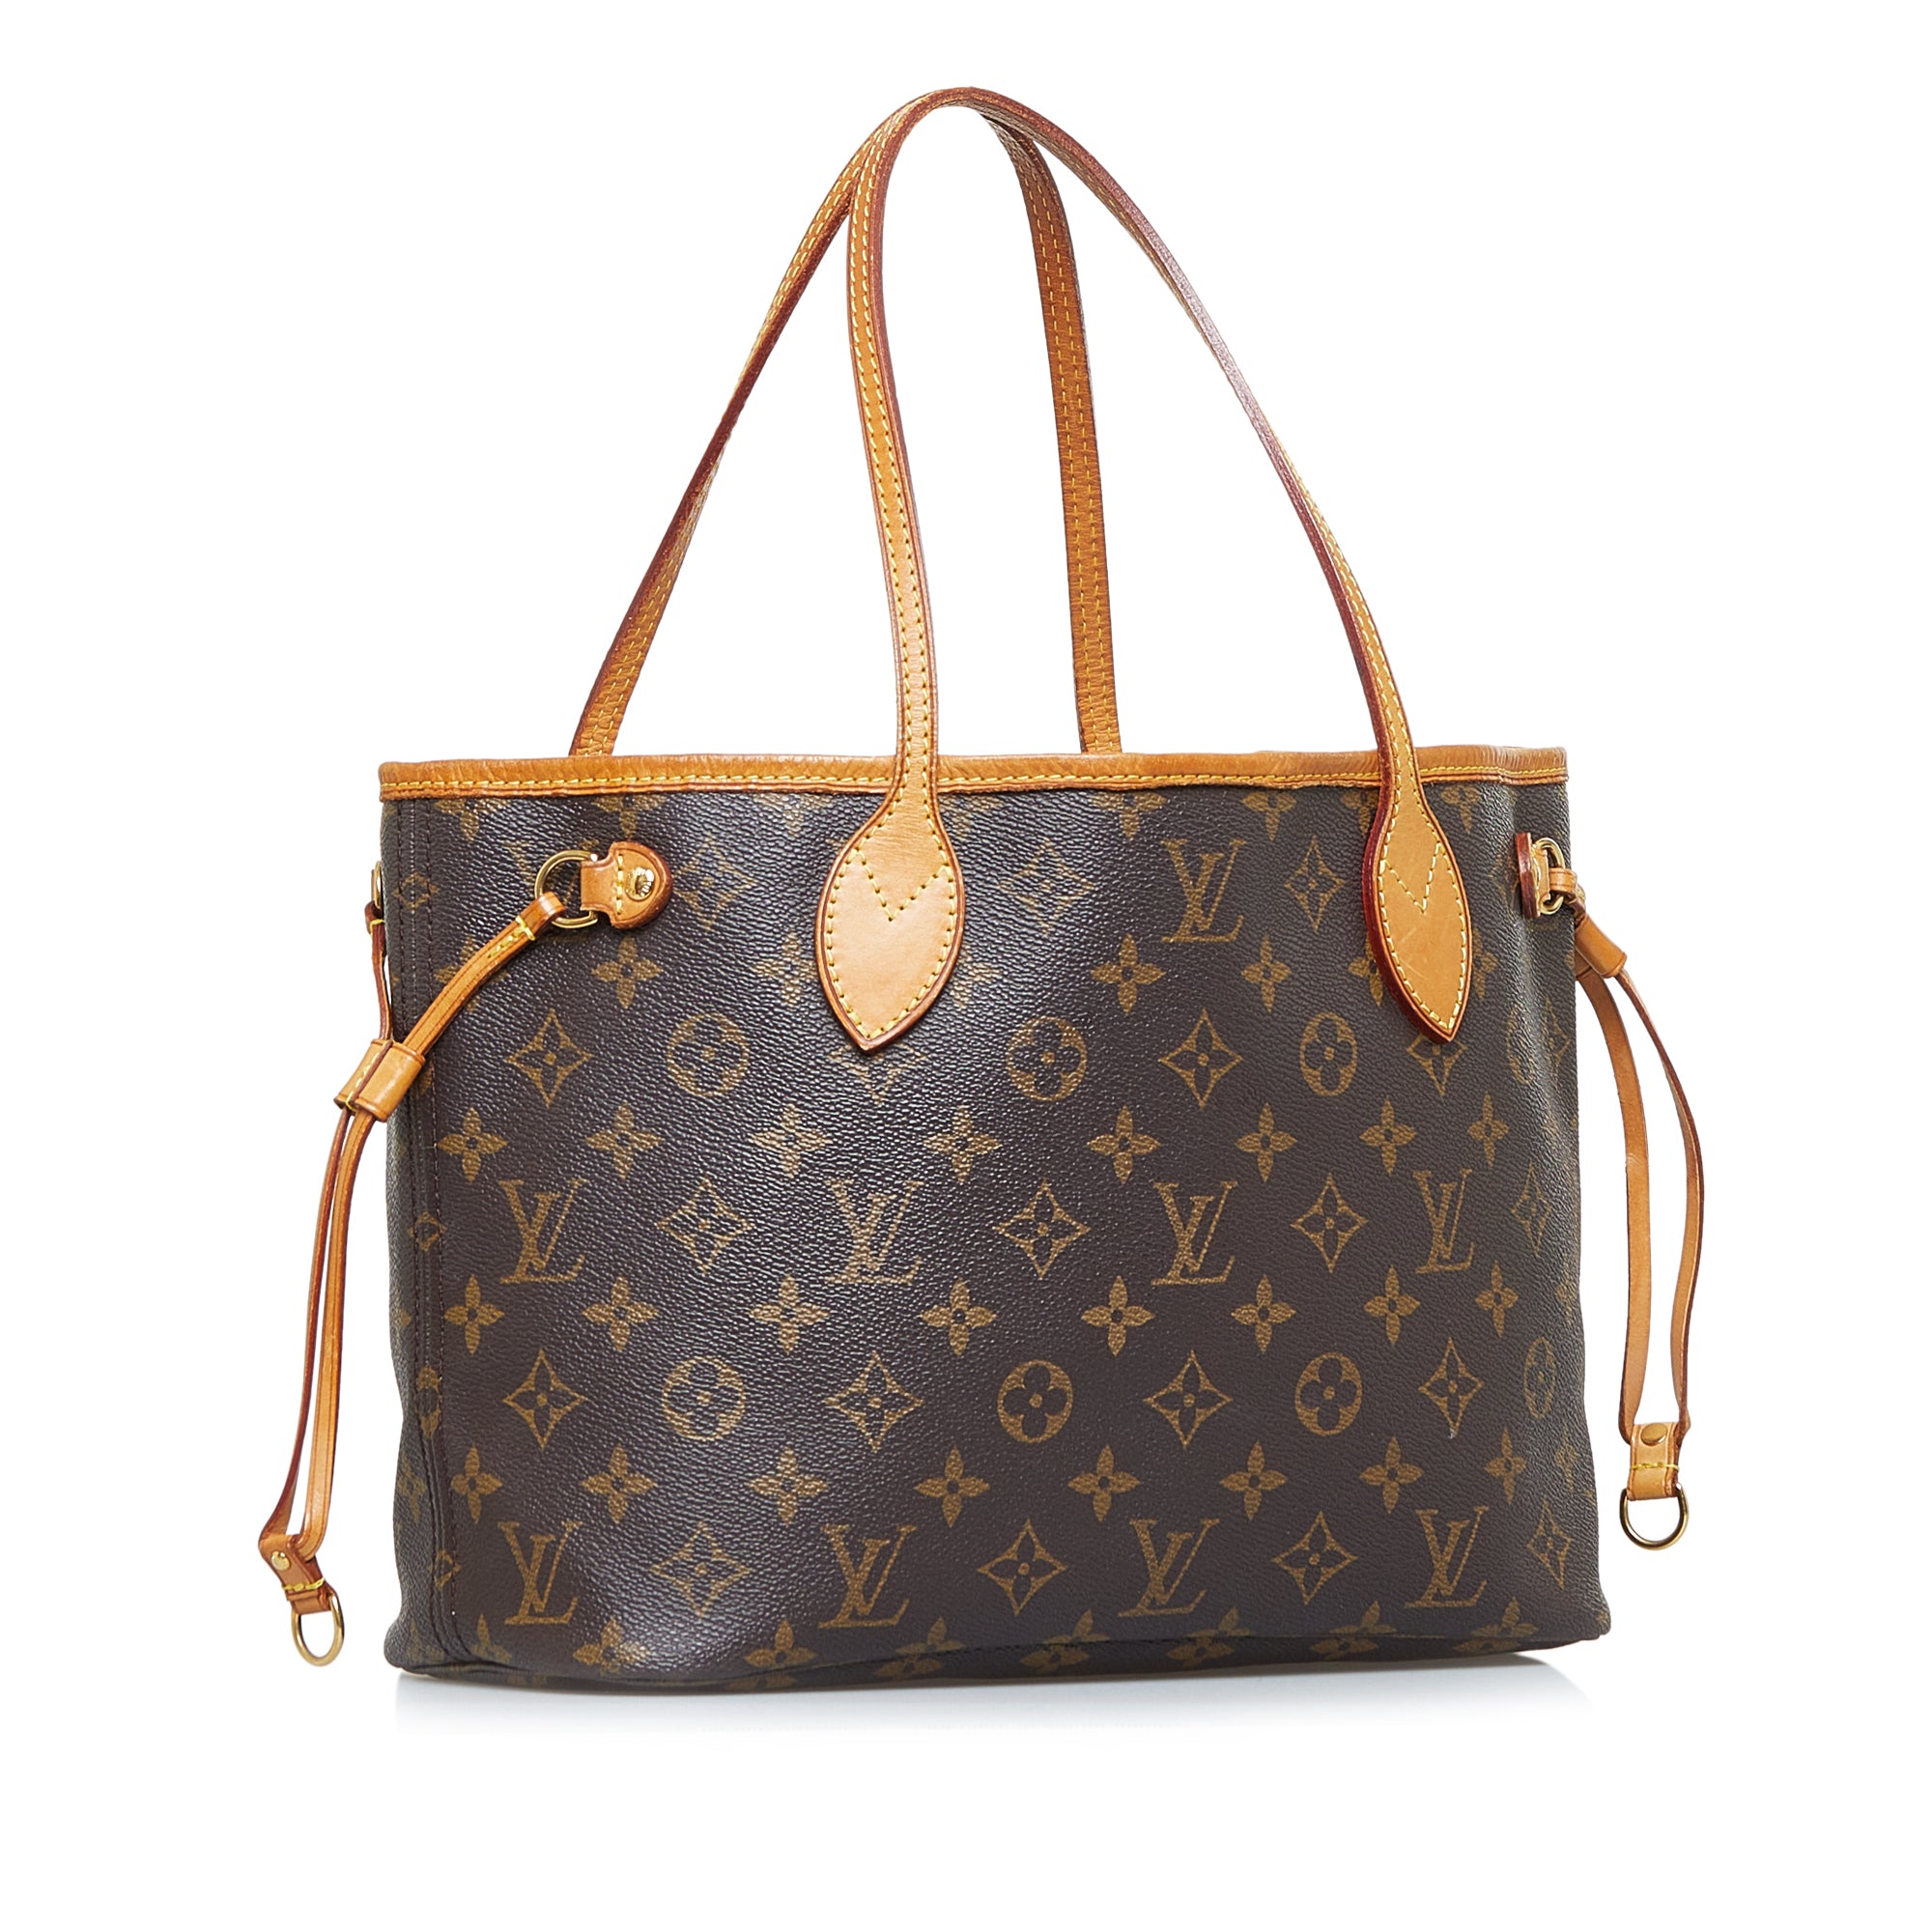 Louis Vuitton, Bags, Louis Vuitton Neverfull Pm